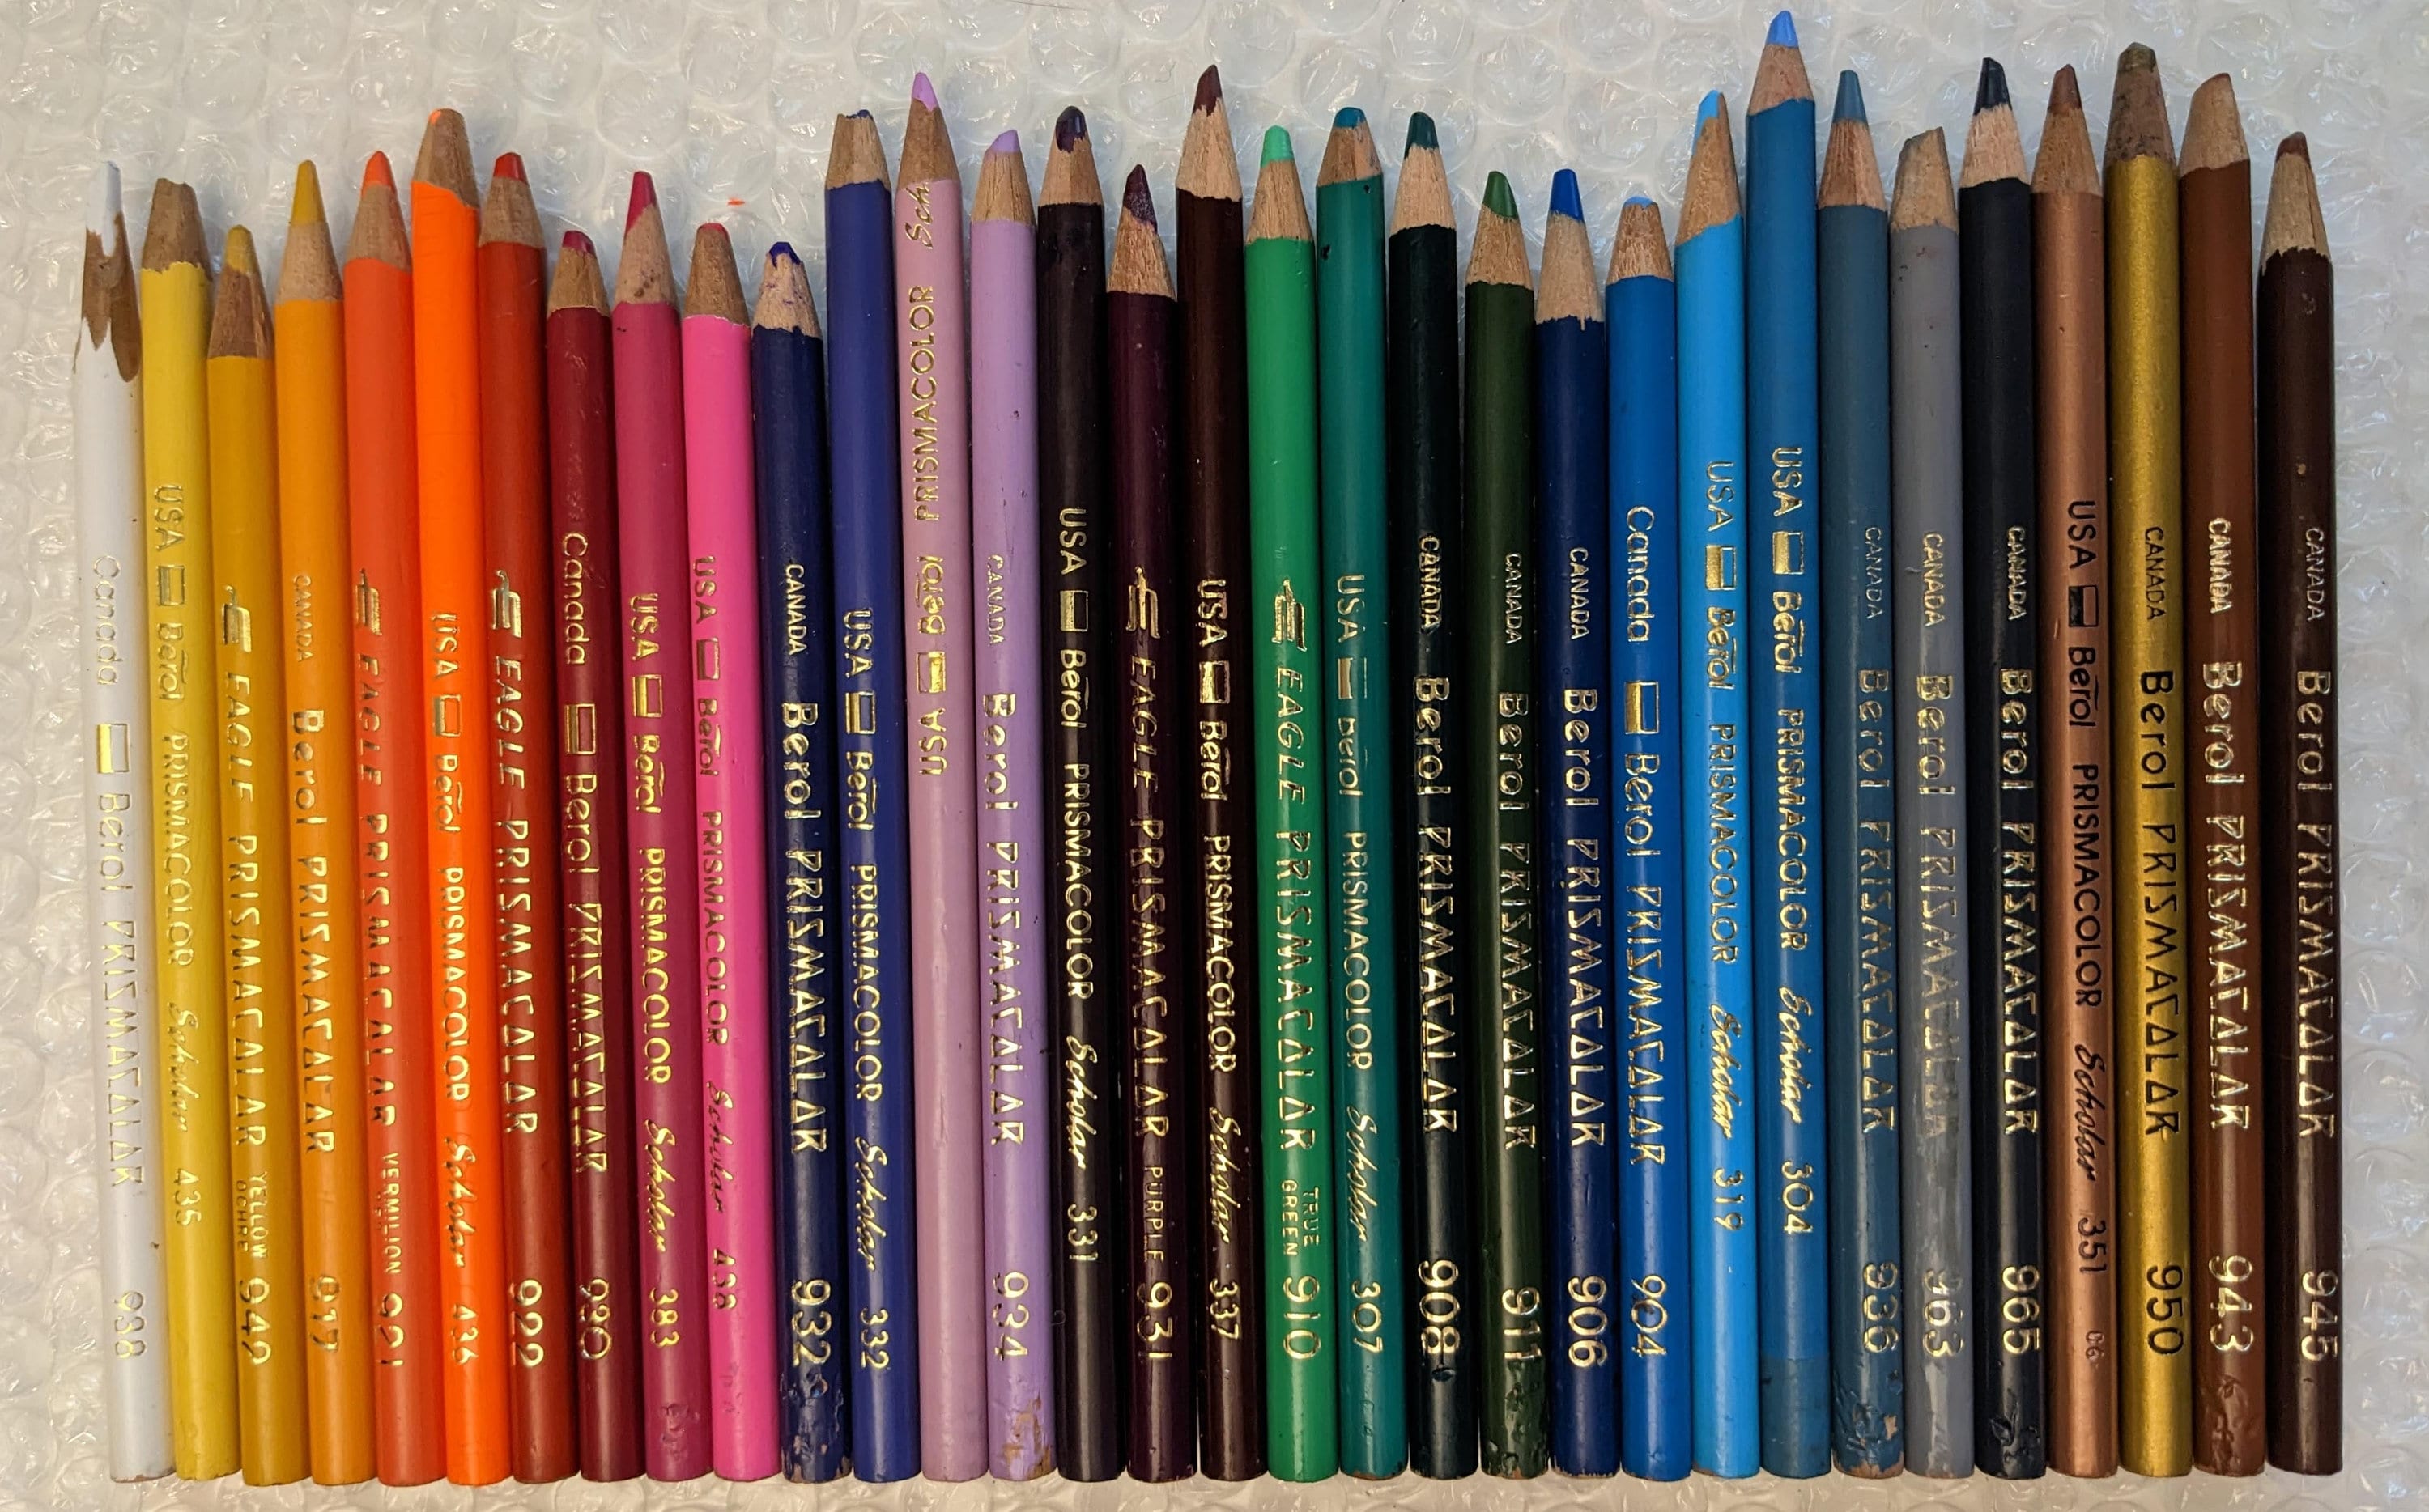 Prismacolor Colored Pencils, Set of 48 Pencils Prismacolor Scholar Pencils  Drawing, Blending, Book Coloring, Prismacolor Arts Crafts 